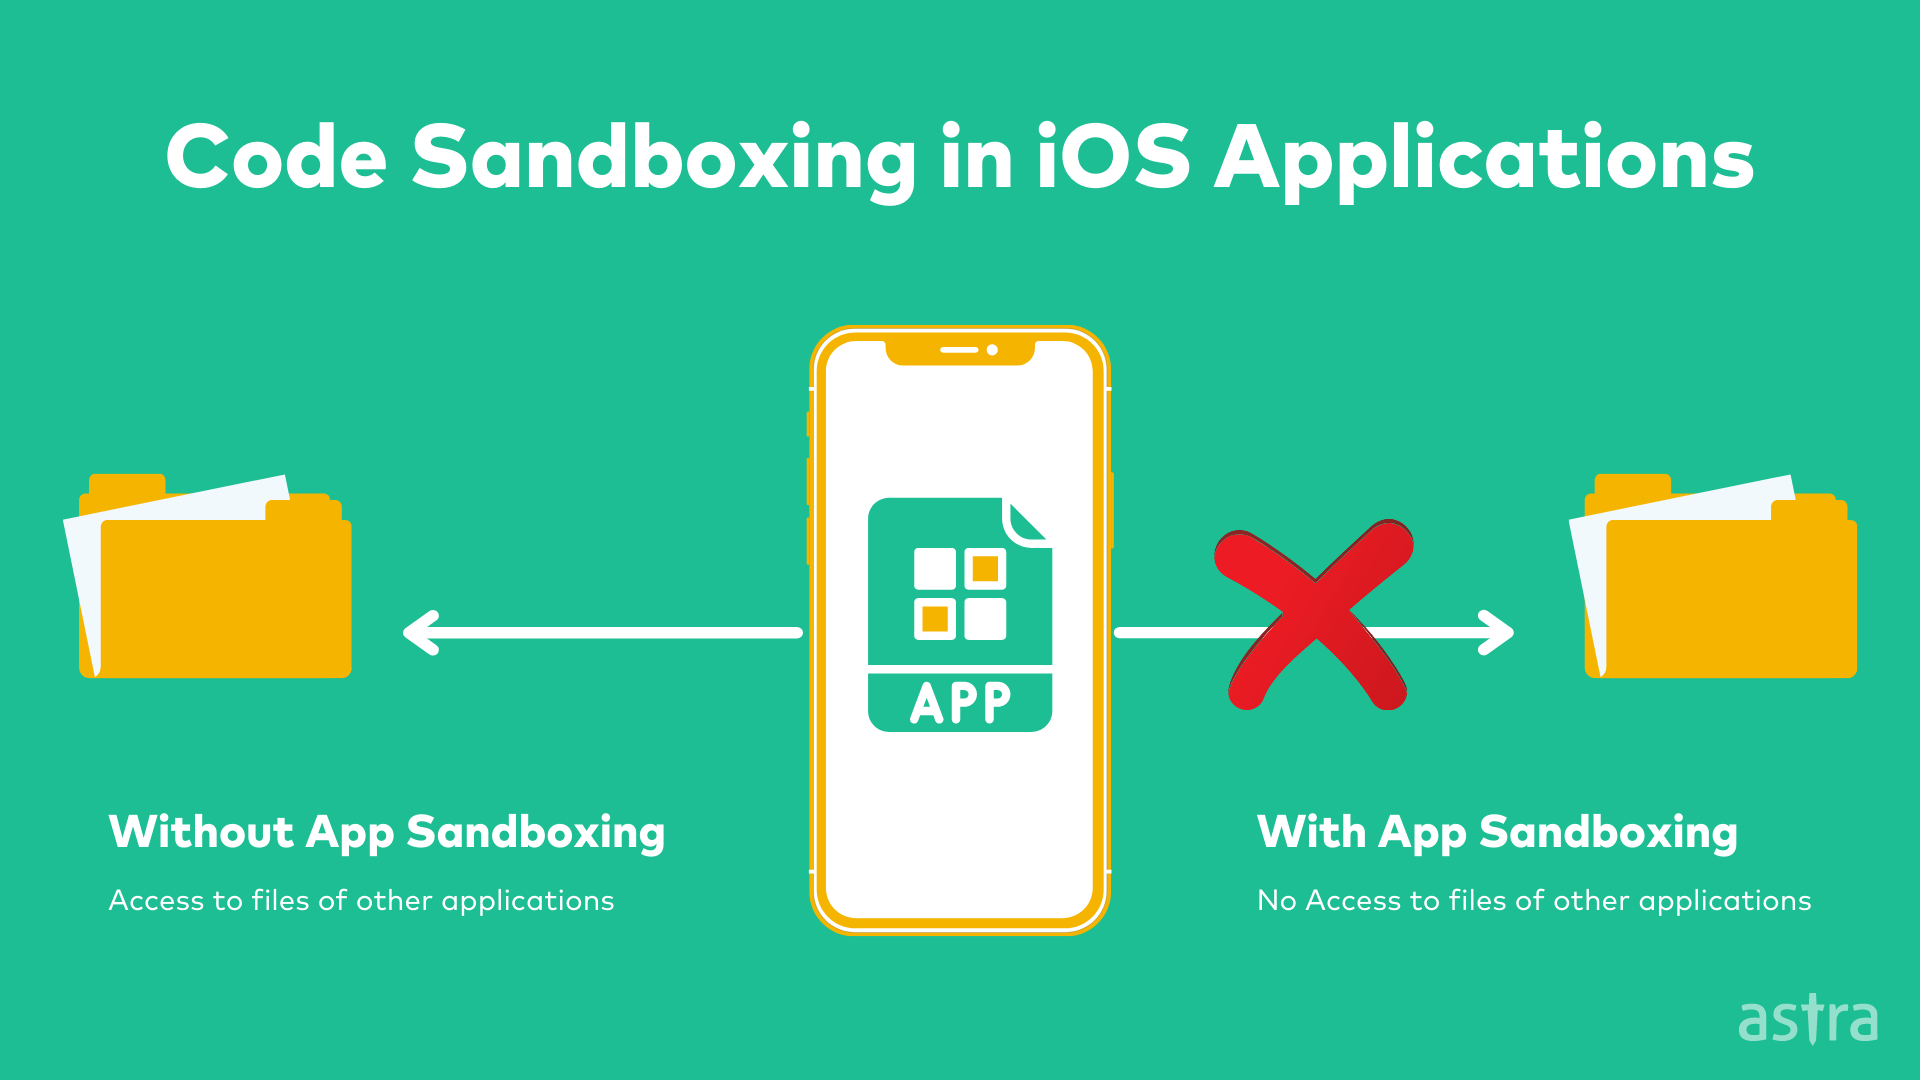 What is App Sandboxing?